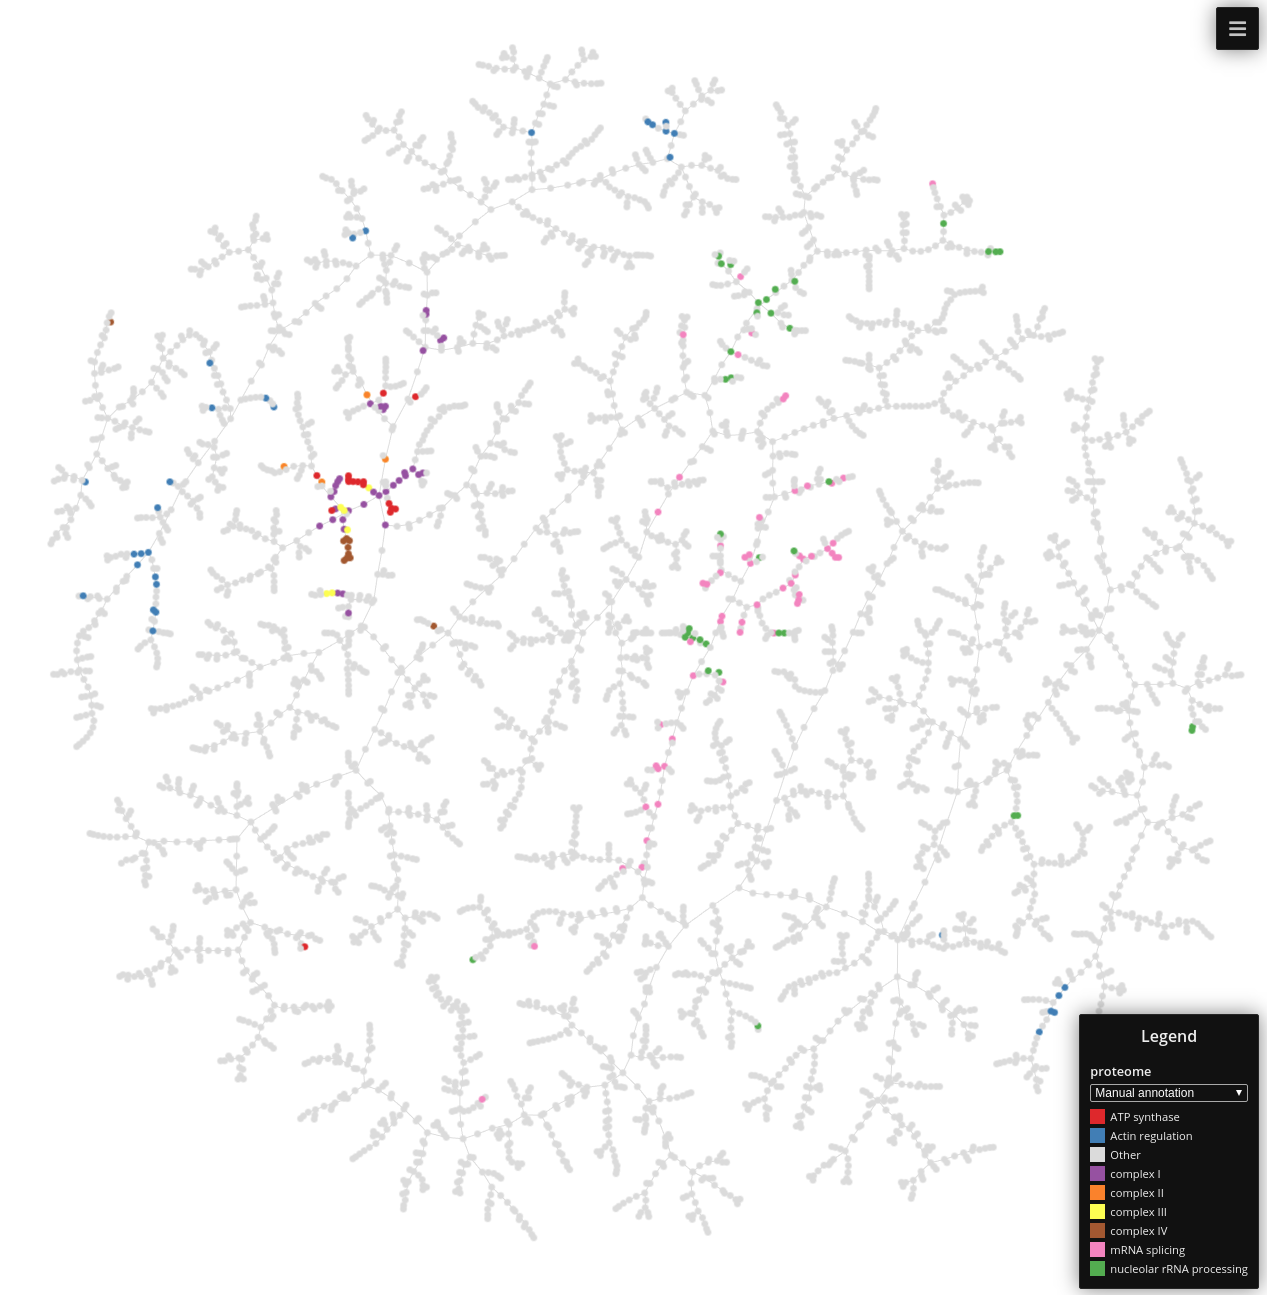 Visualization of the ProteomeHD proteomics data set.